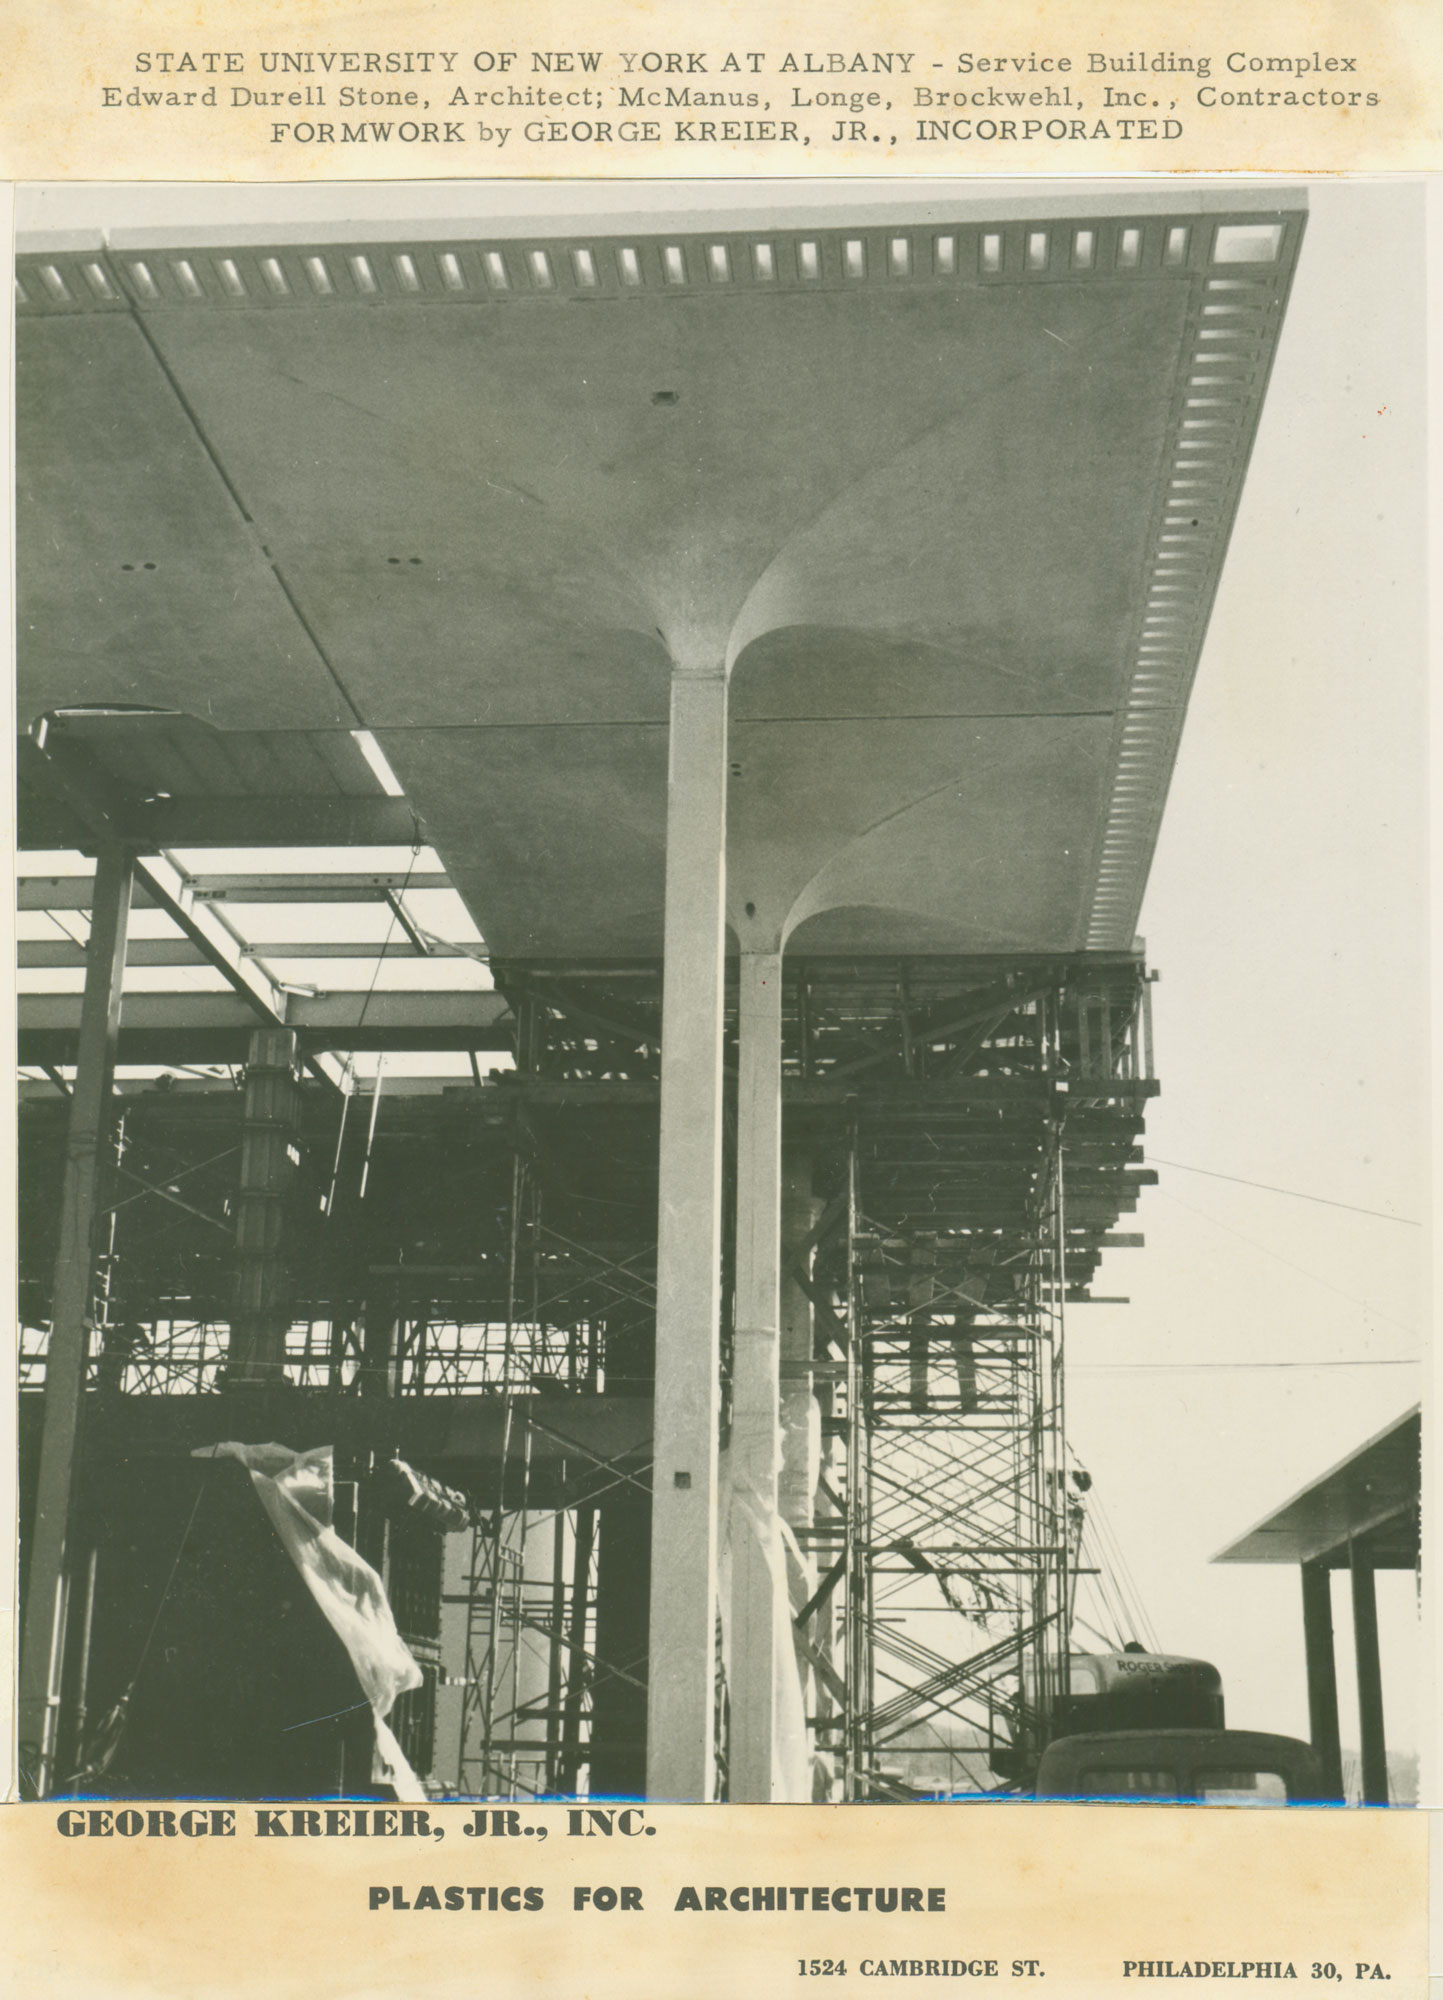 Image of precast concrete for SUNY Albany building